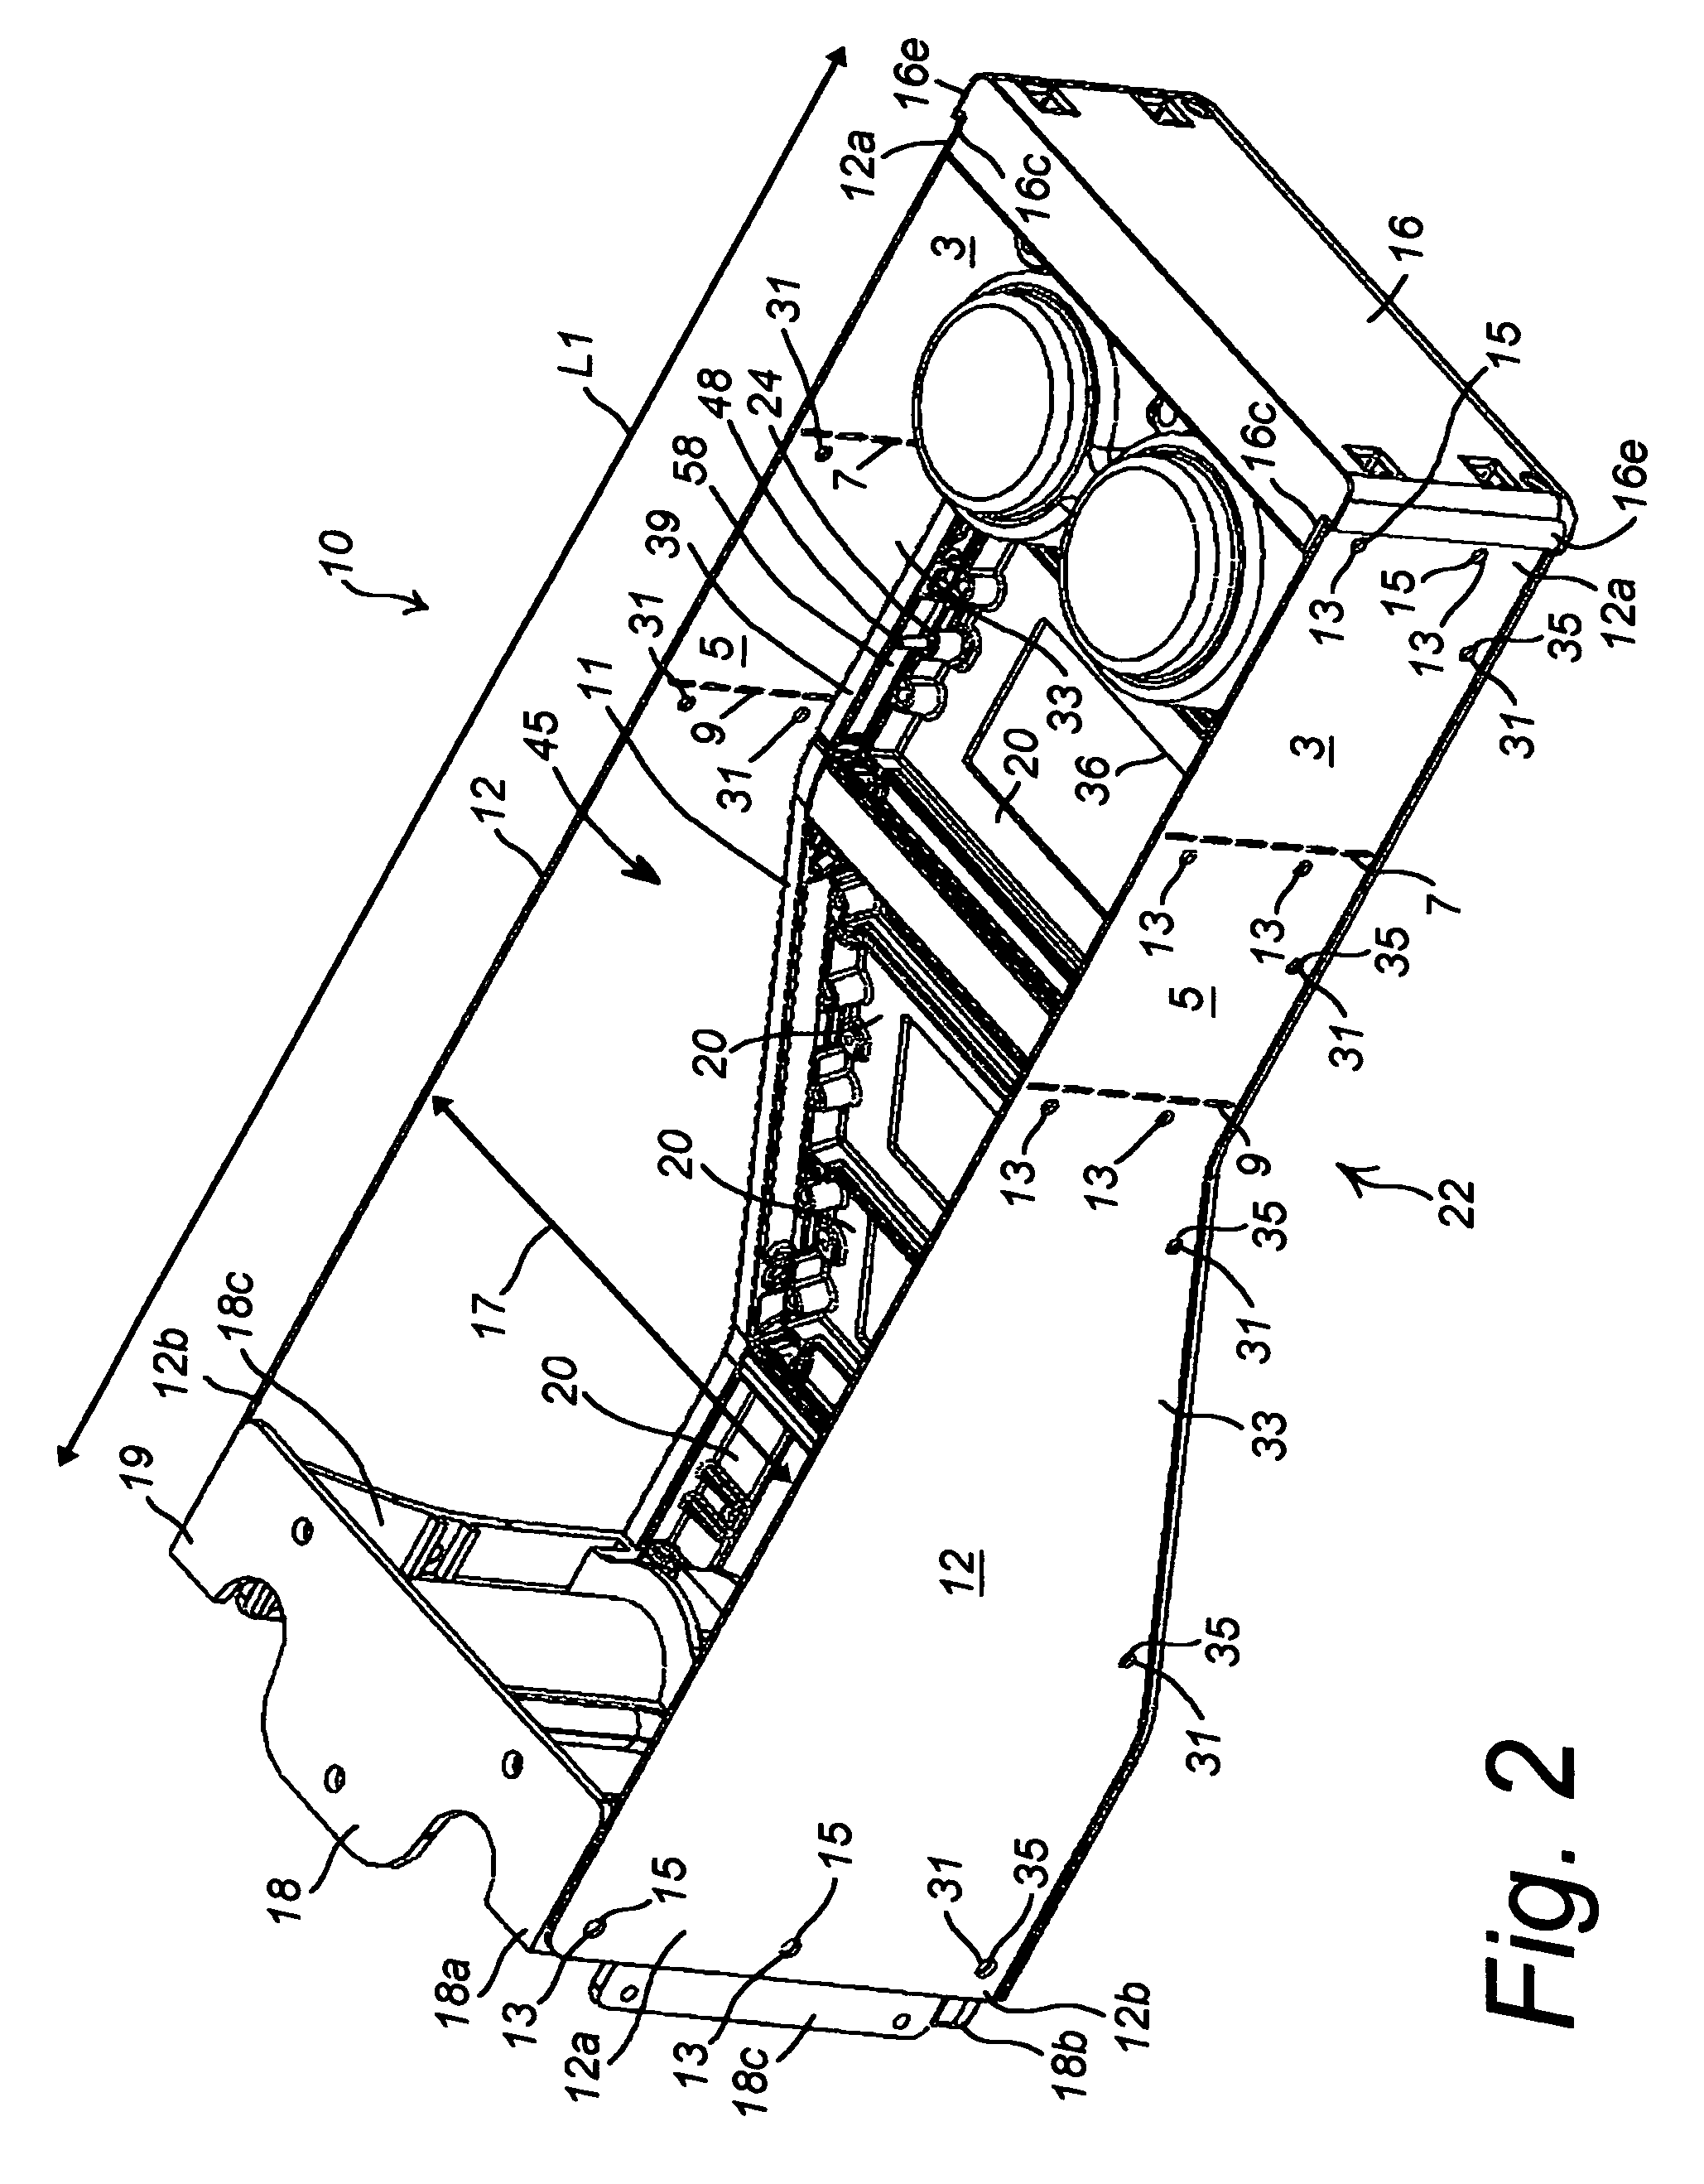 Vehicle console having molded side rails